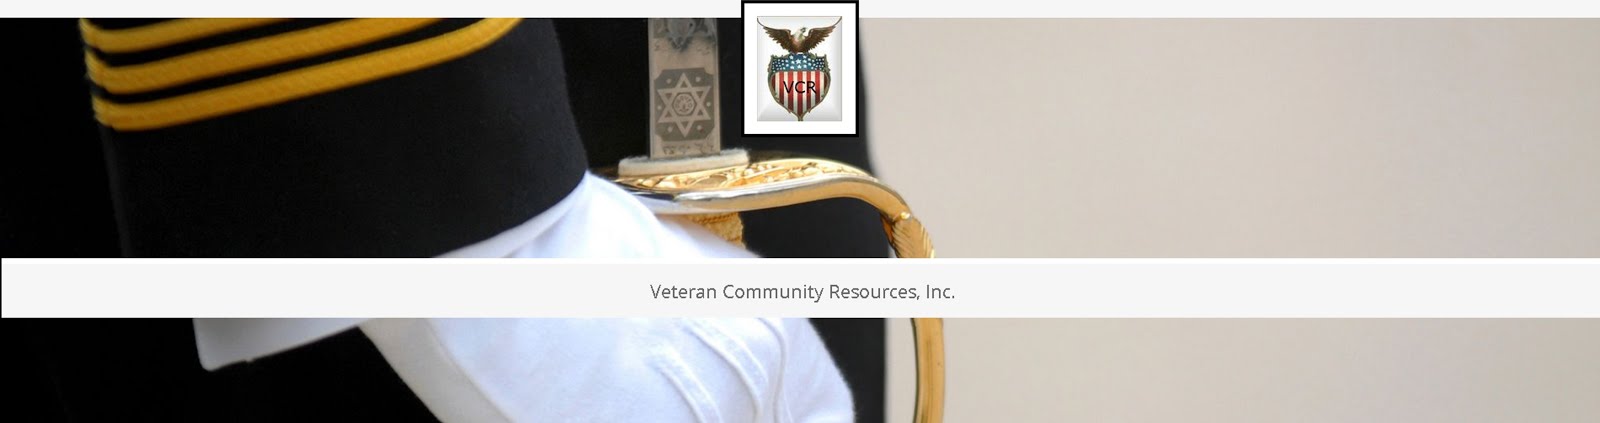 Veterans Community Resources Inc.